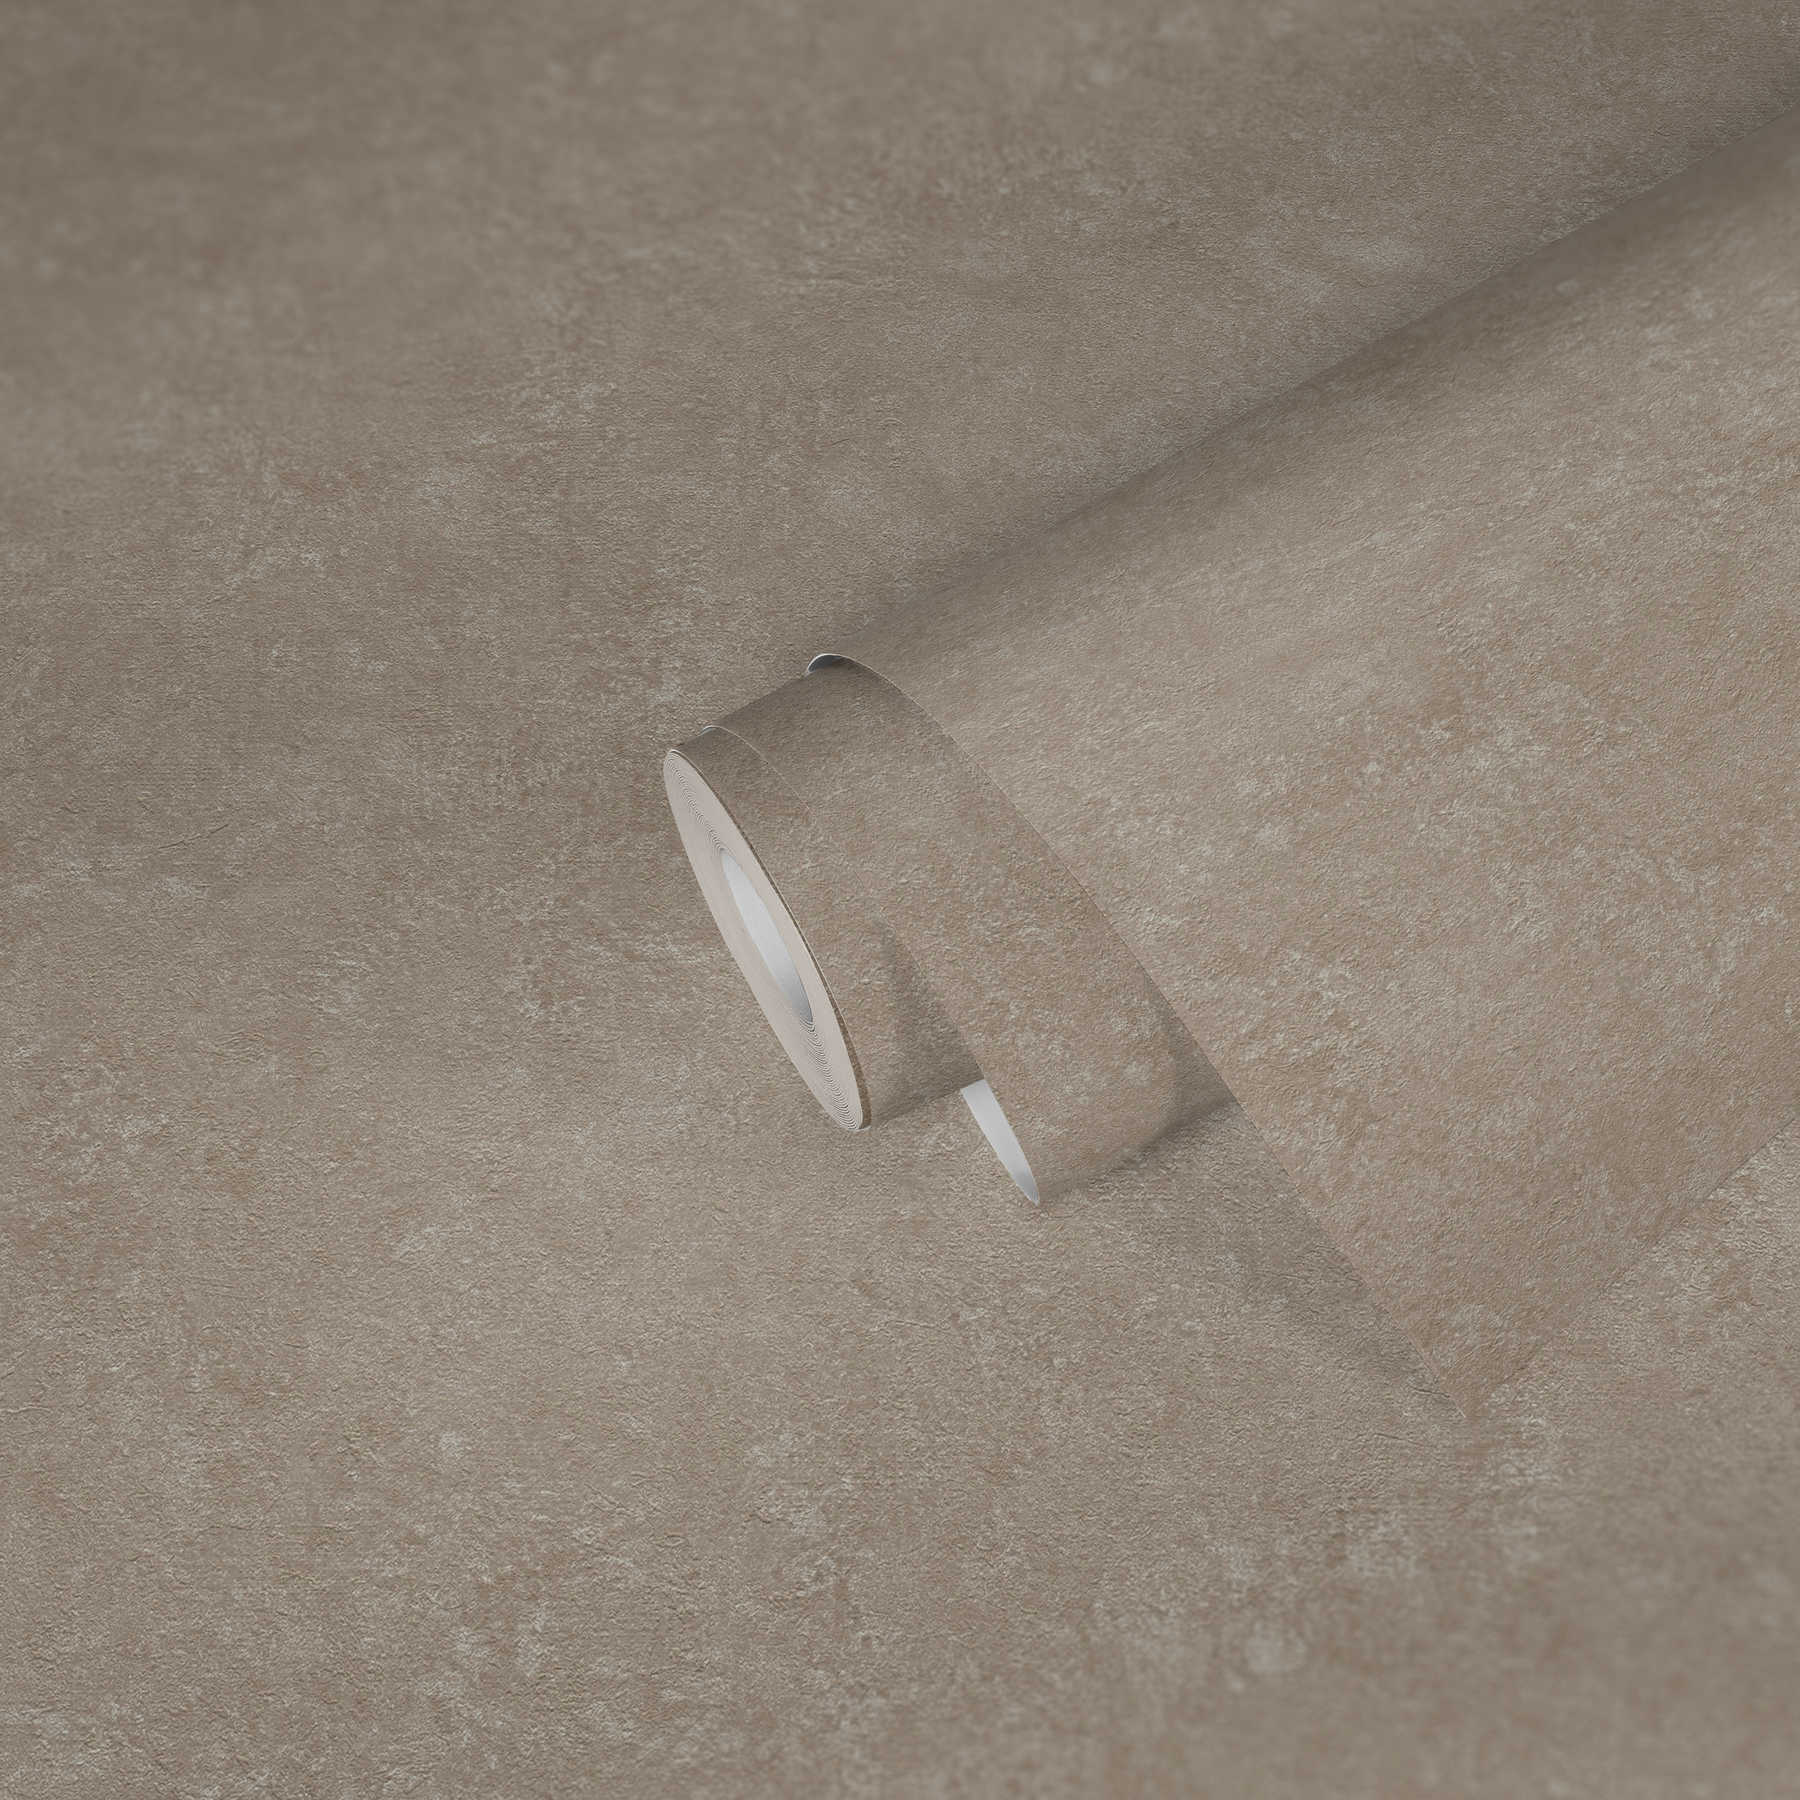             Wallpaper rough plaster look in industrial style - beige, white
        